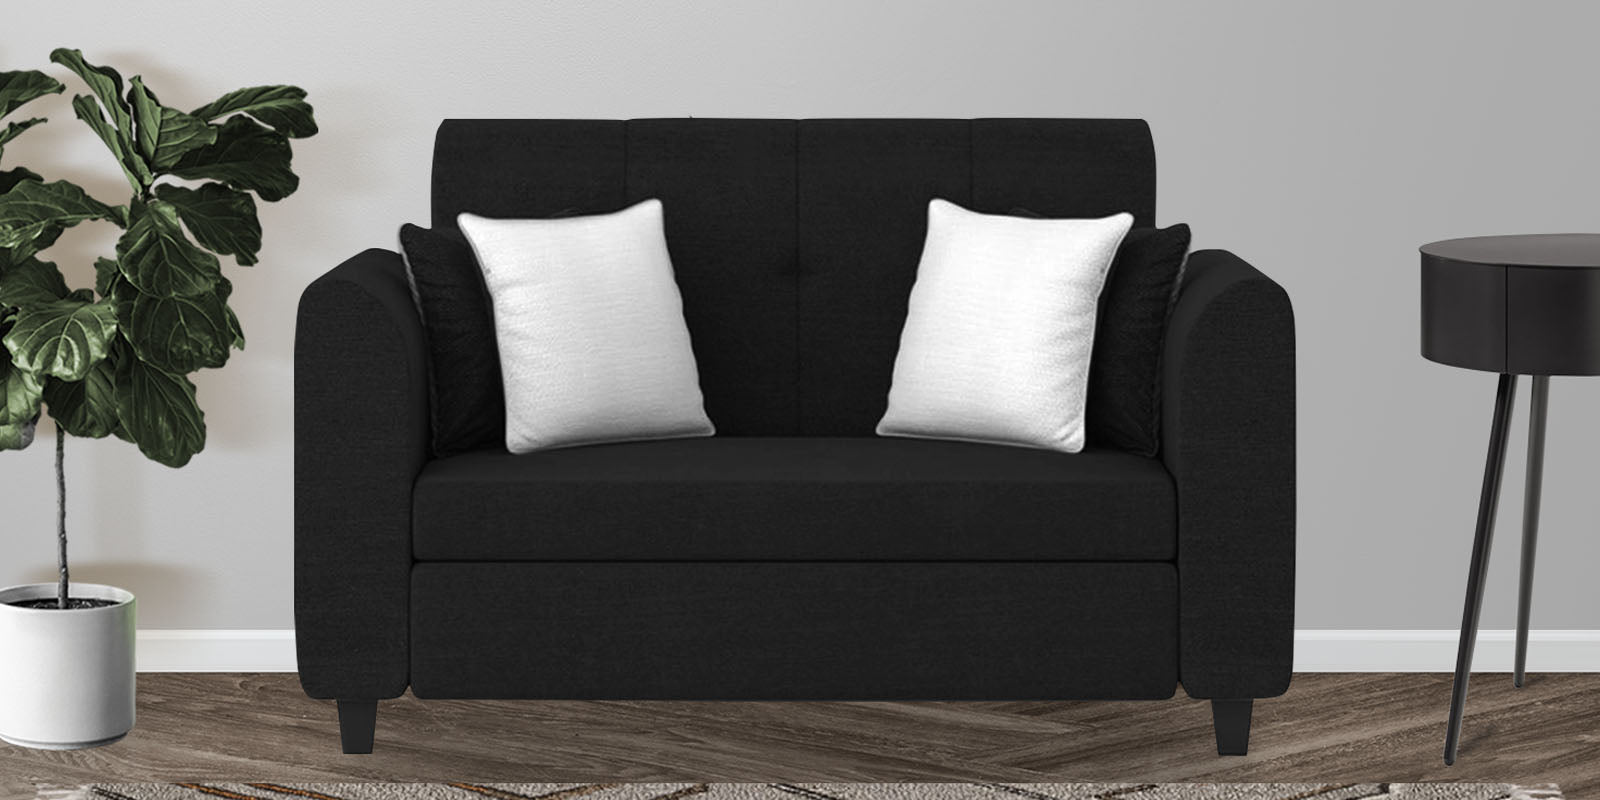 Denmark Fabric 2 Seater Sofa in Zed Black Colour